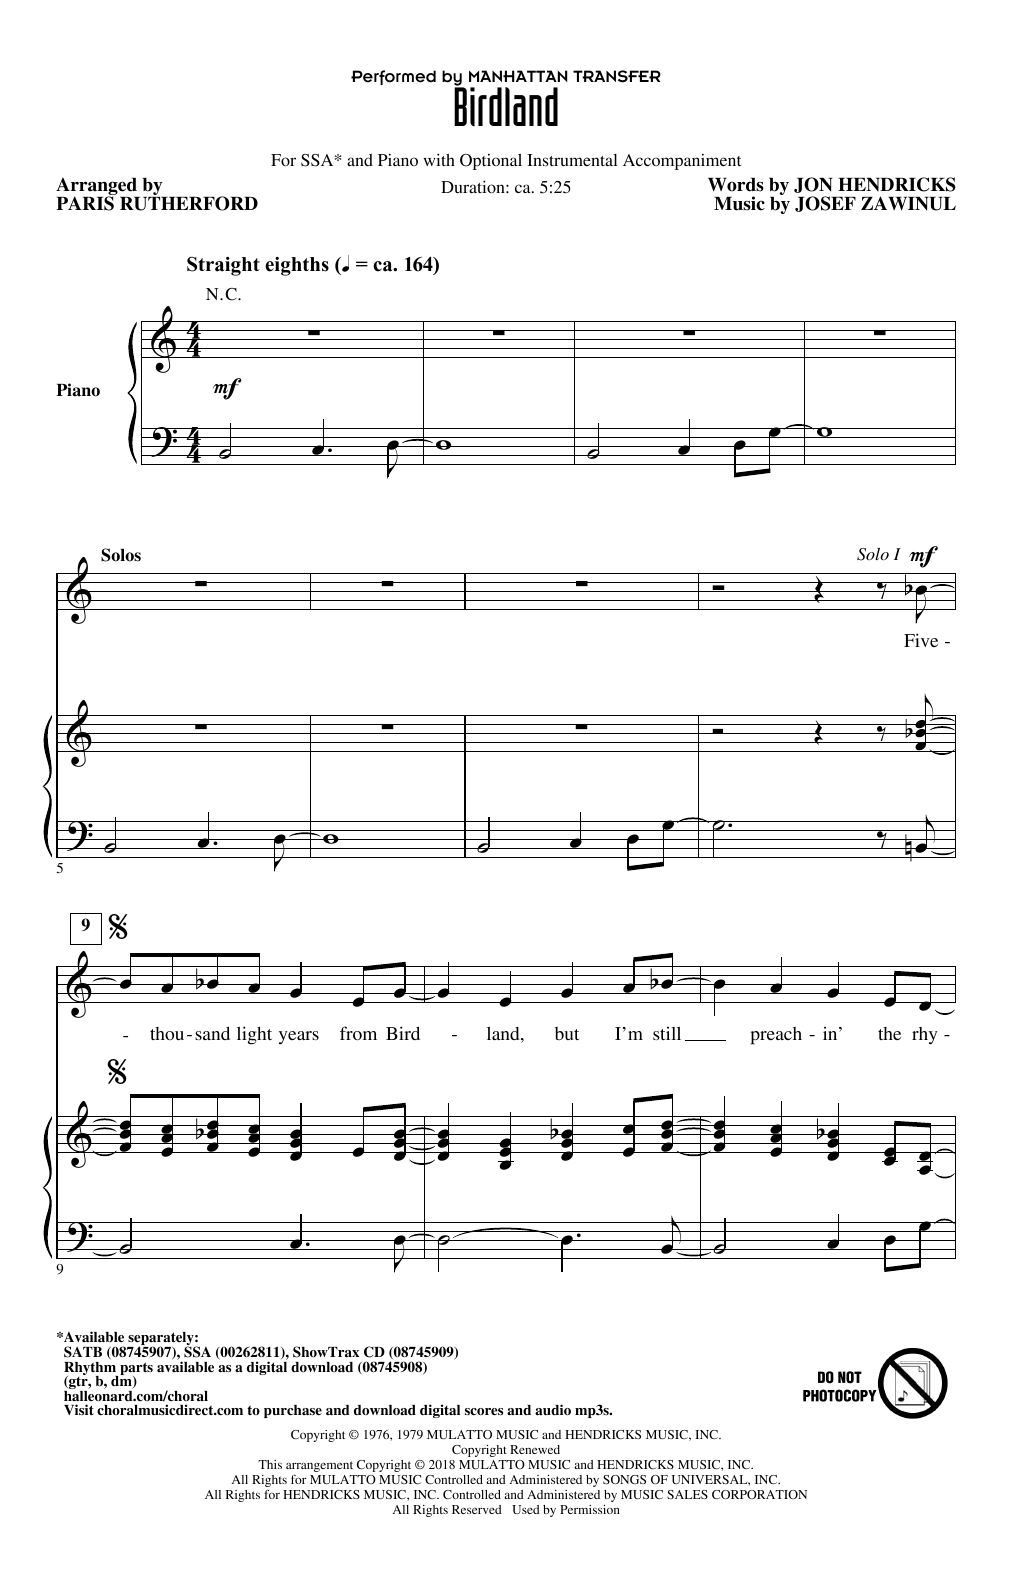 The Manhattan Transfer Birdland (arr. Paris Rutherford) sheet music notes and chords arranged for SSA Choir